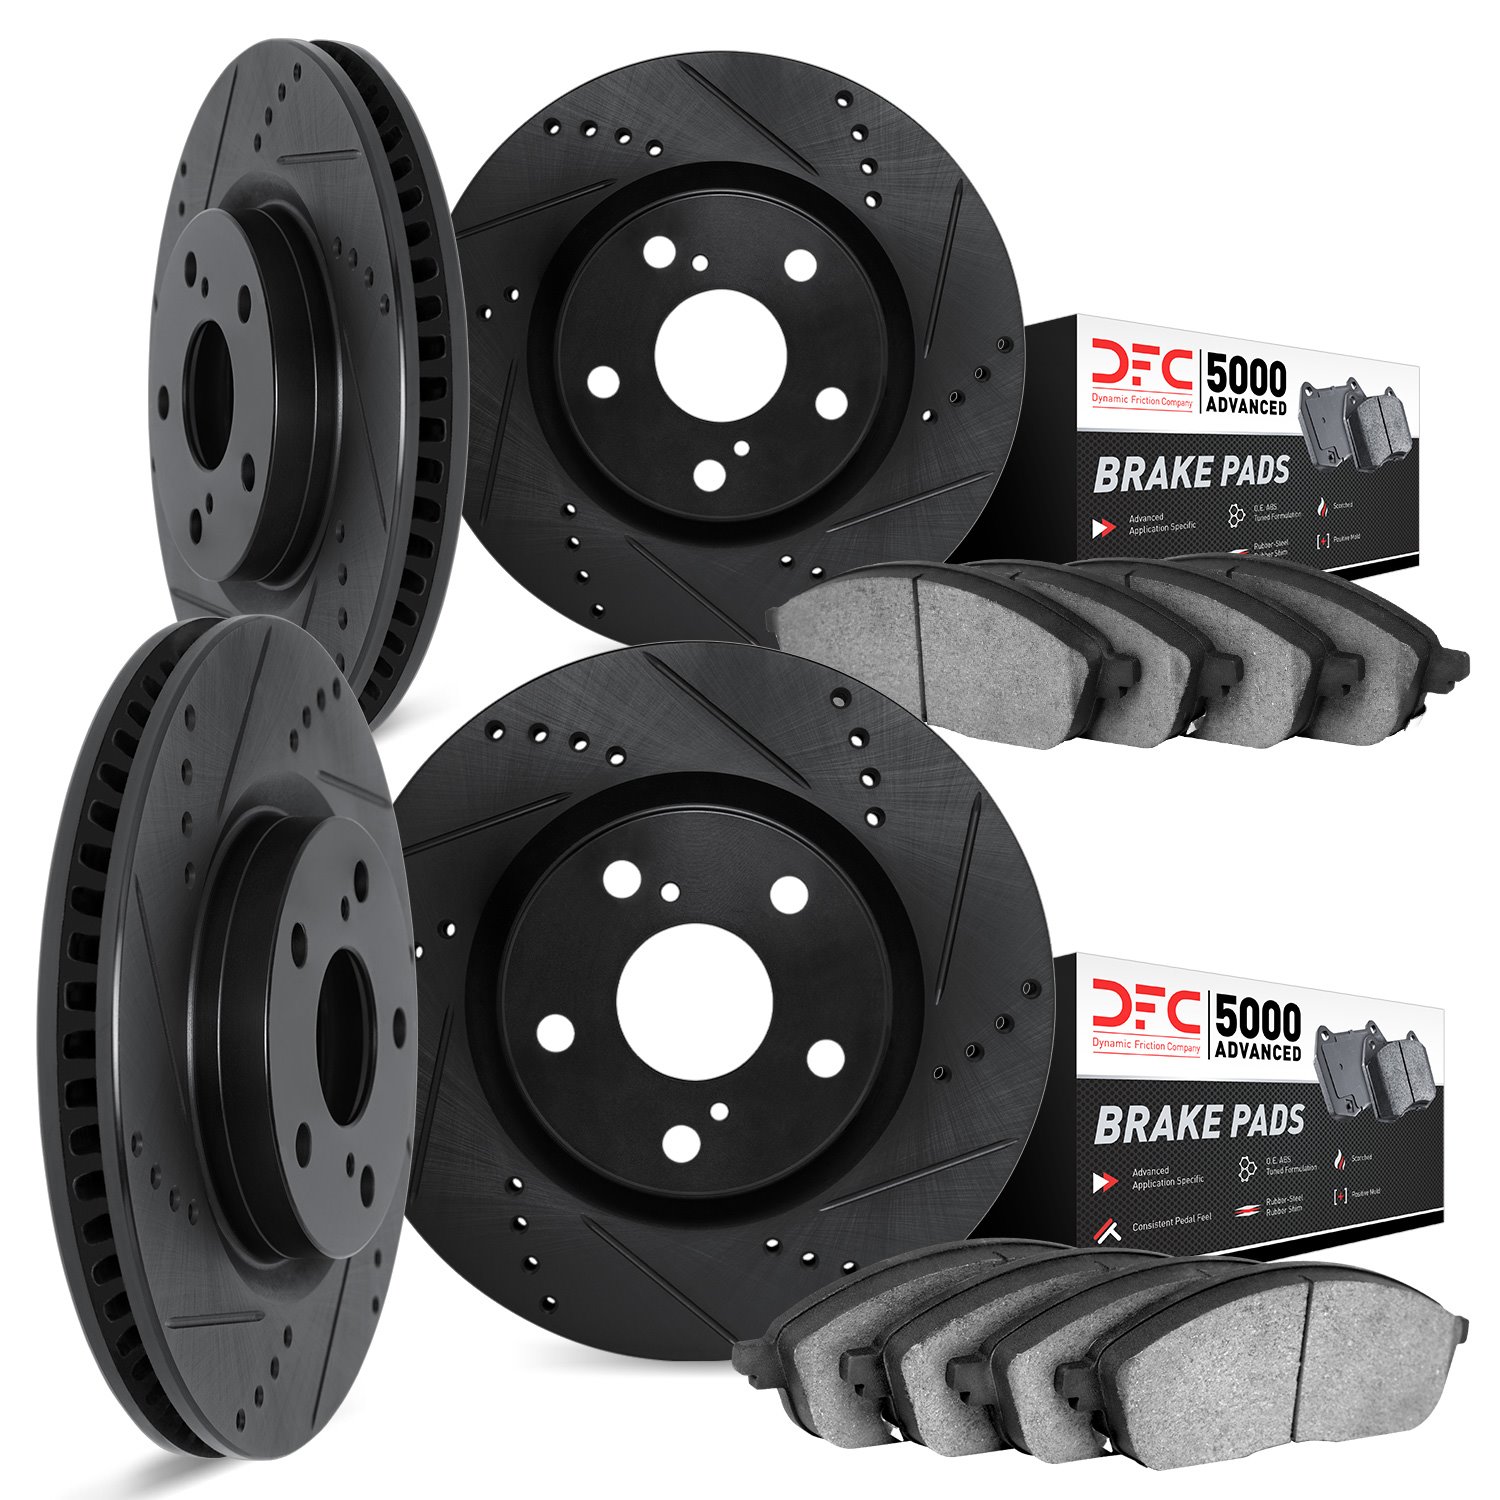 8504-40229 Drilled/Slotted Brake Rotors w/5000 Advanced Brake Pads Kit [Black], 2002-2006 Multiple Makes/Models, Position: Front